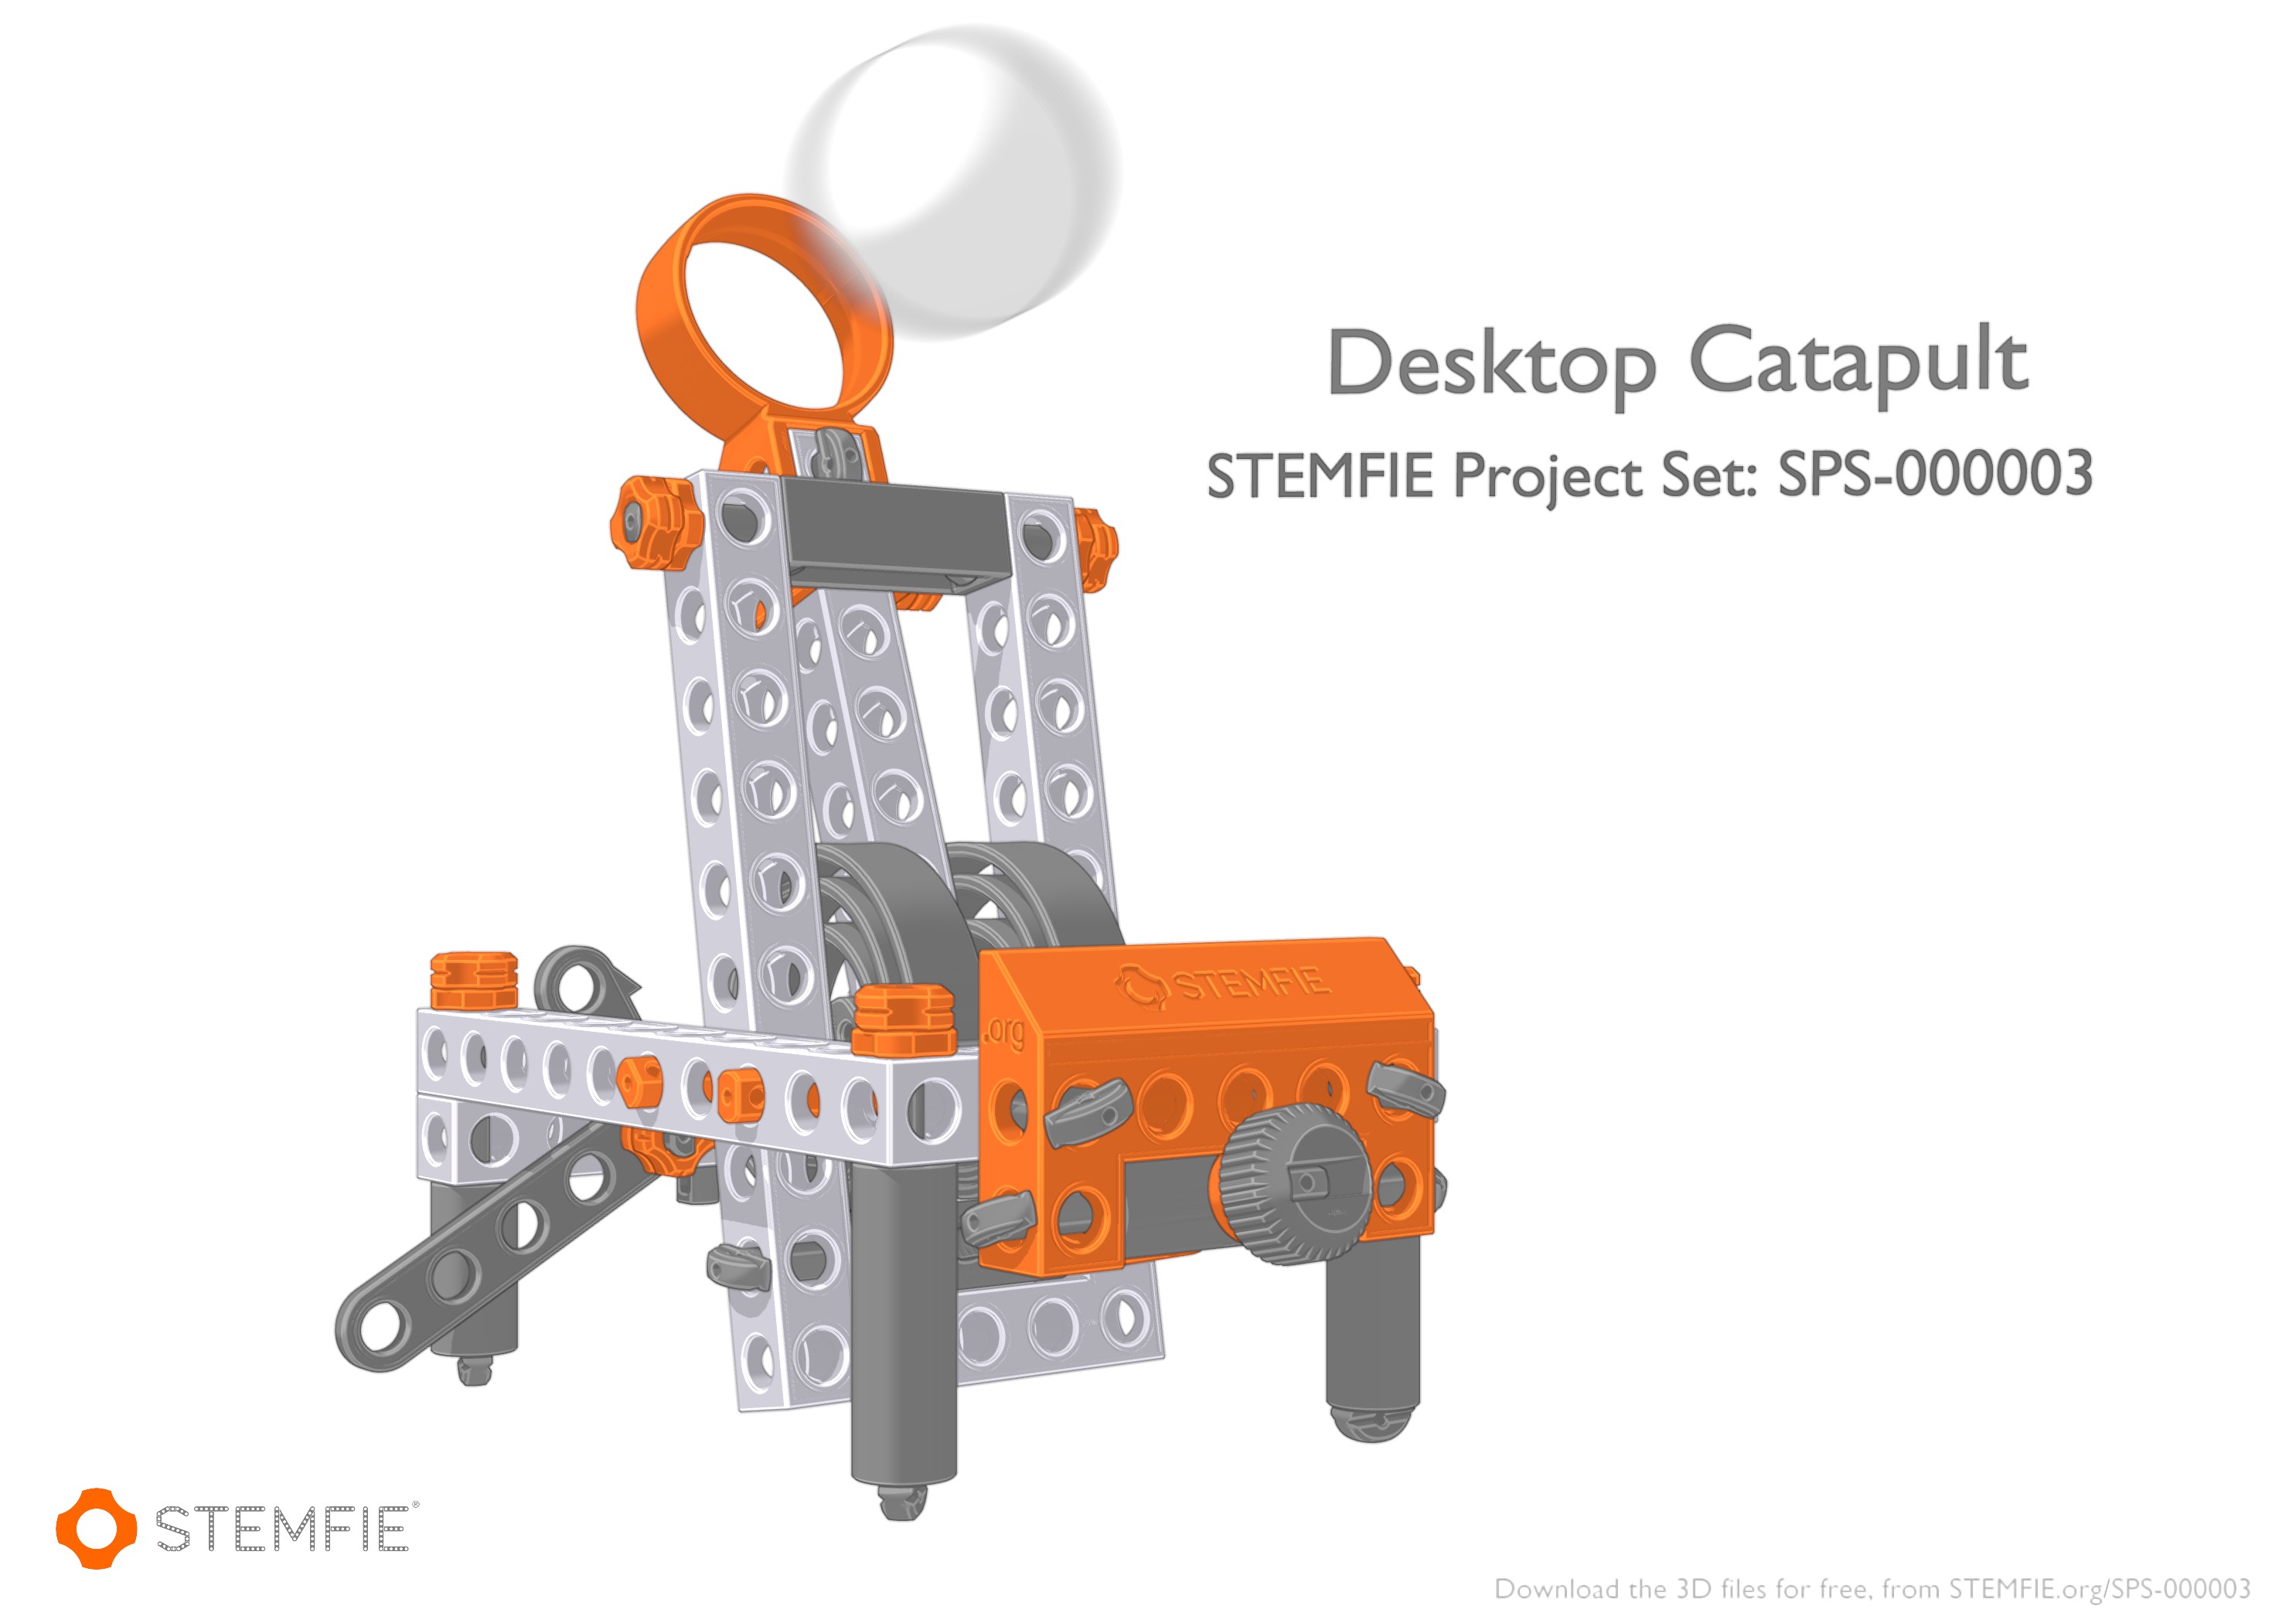 STEMFIE Desktop Catapult